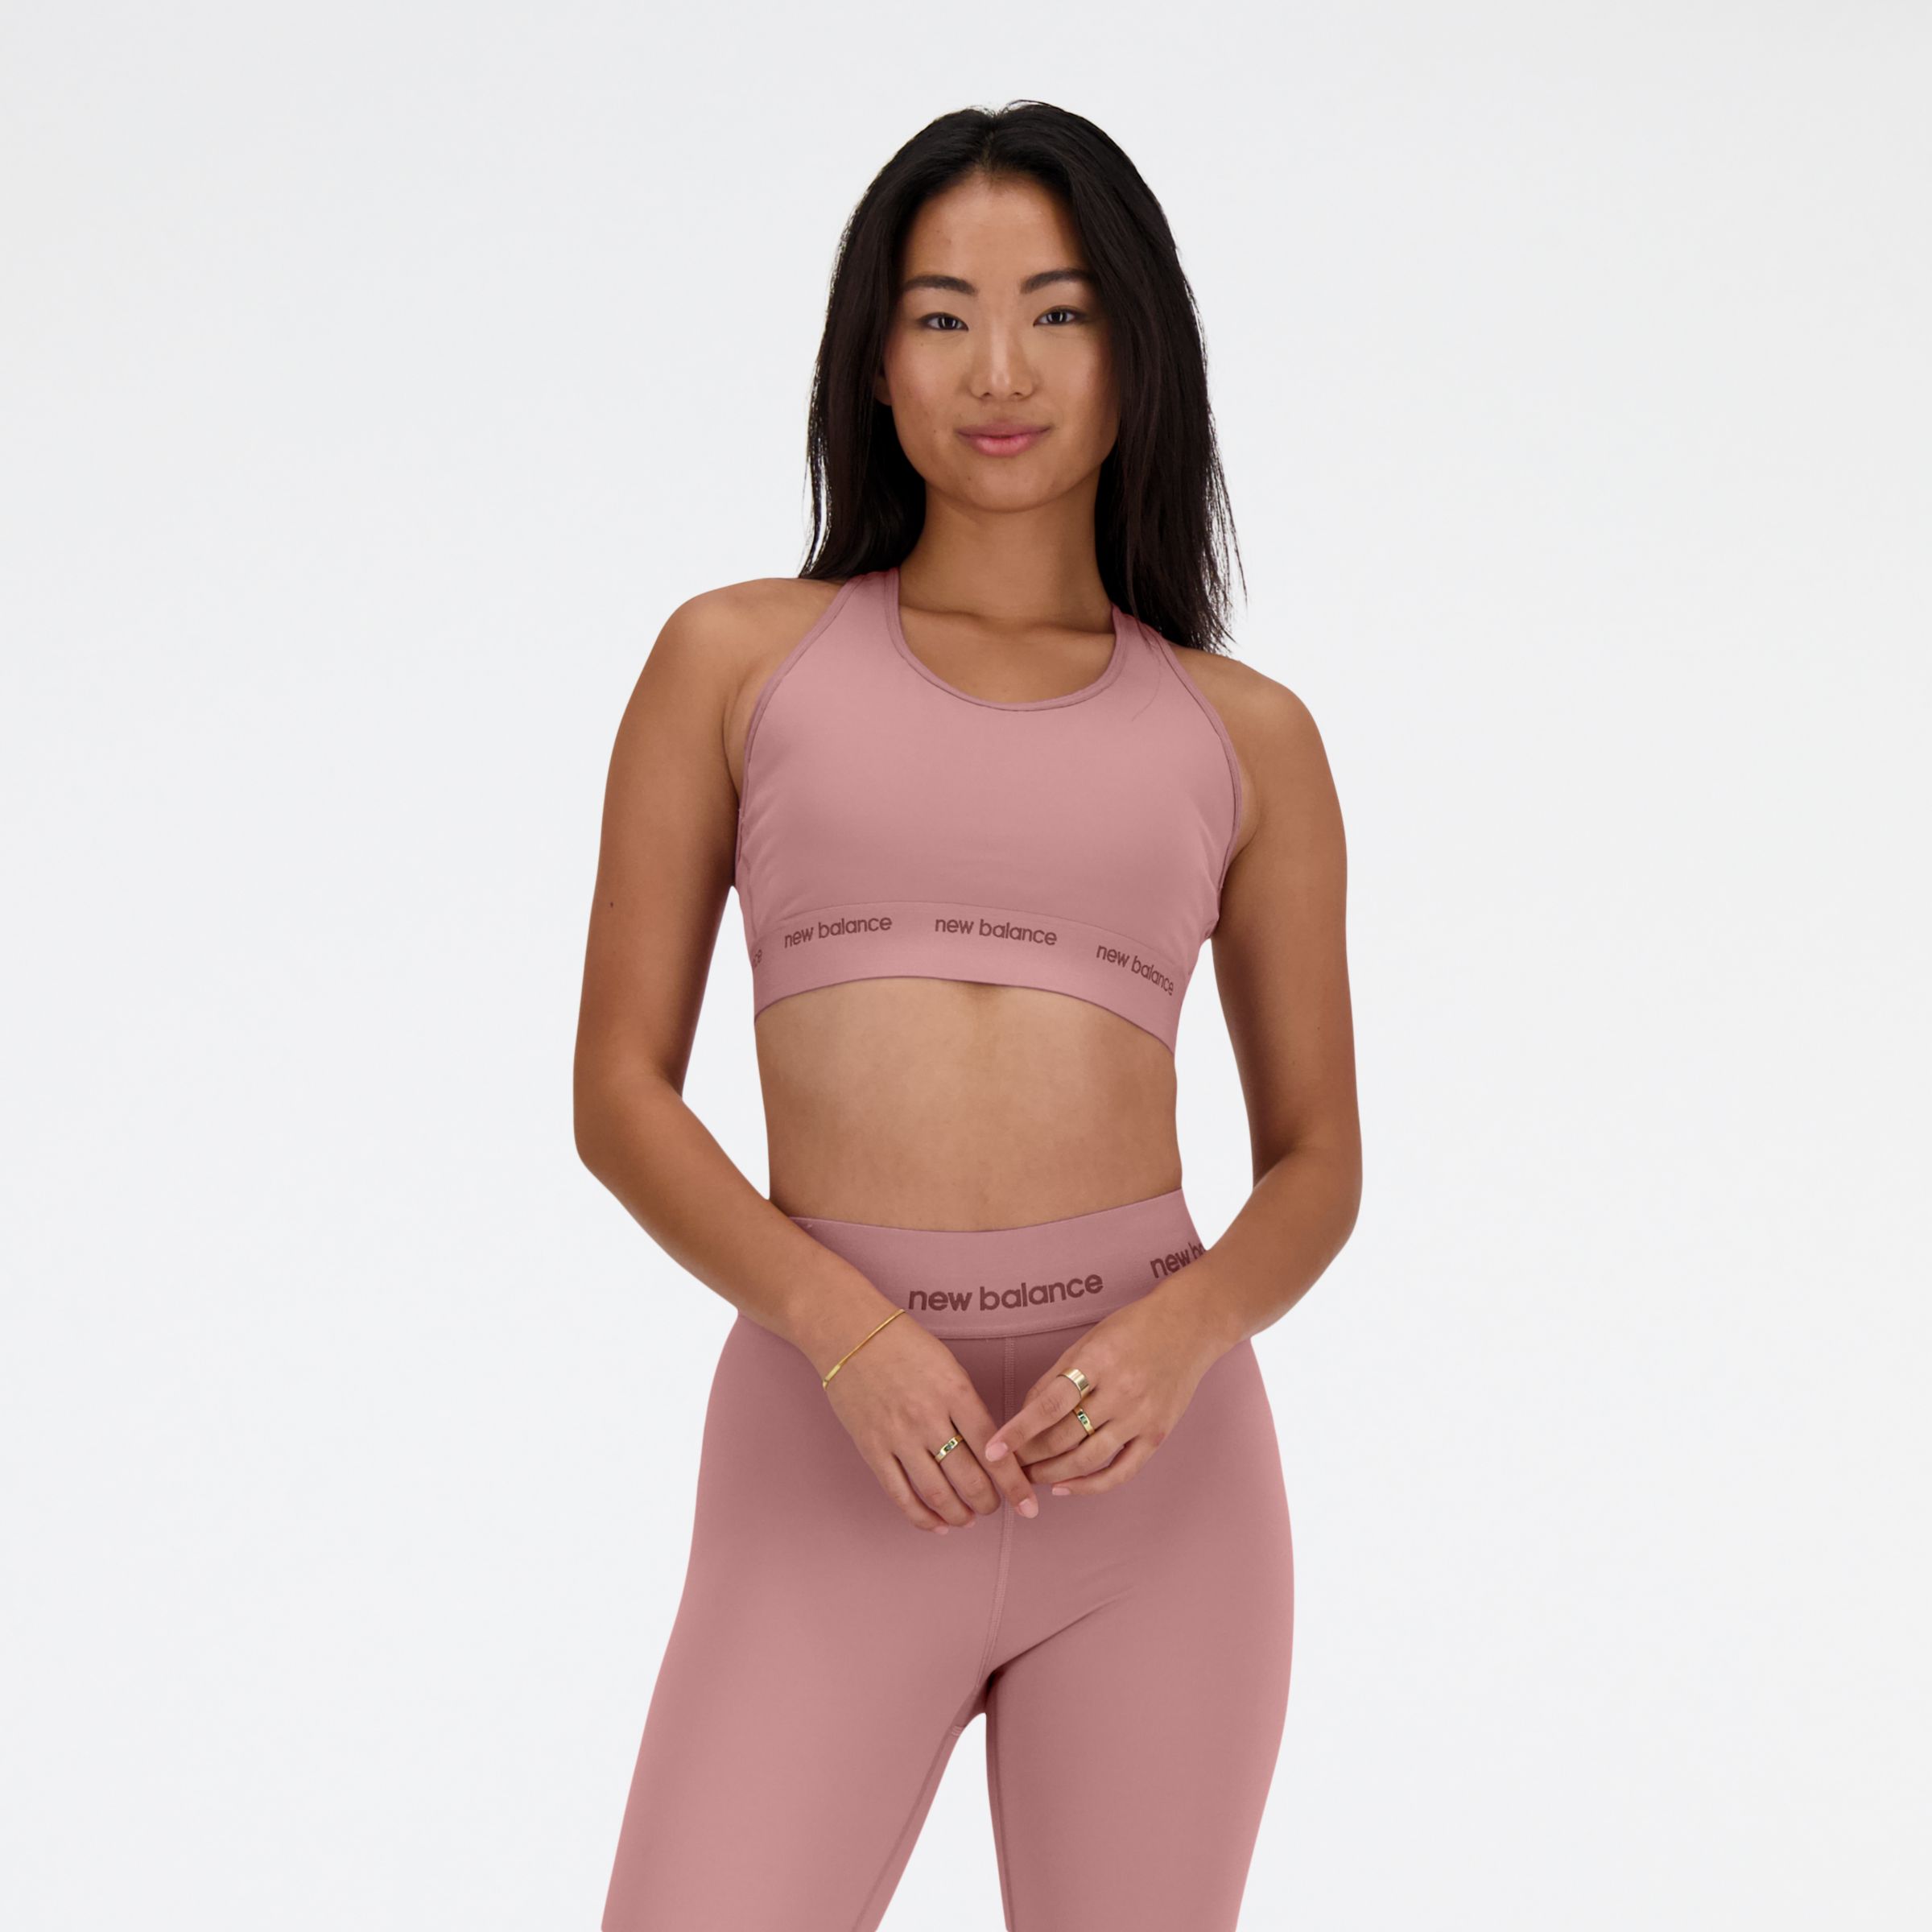 New Balance sports bra Essentials Reimagined black color buy on PRM